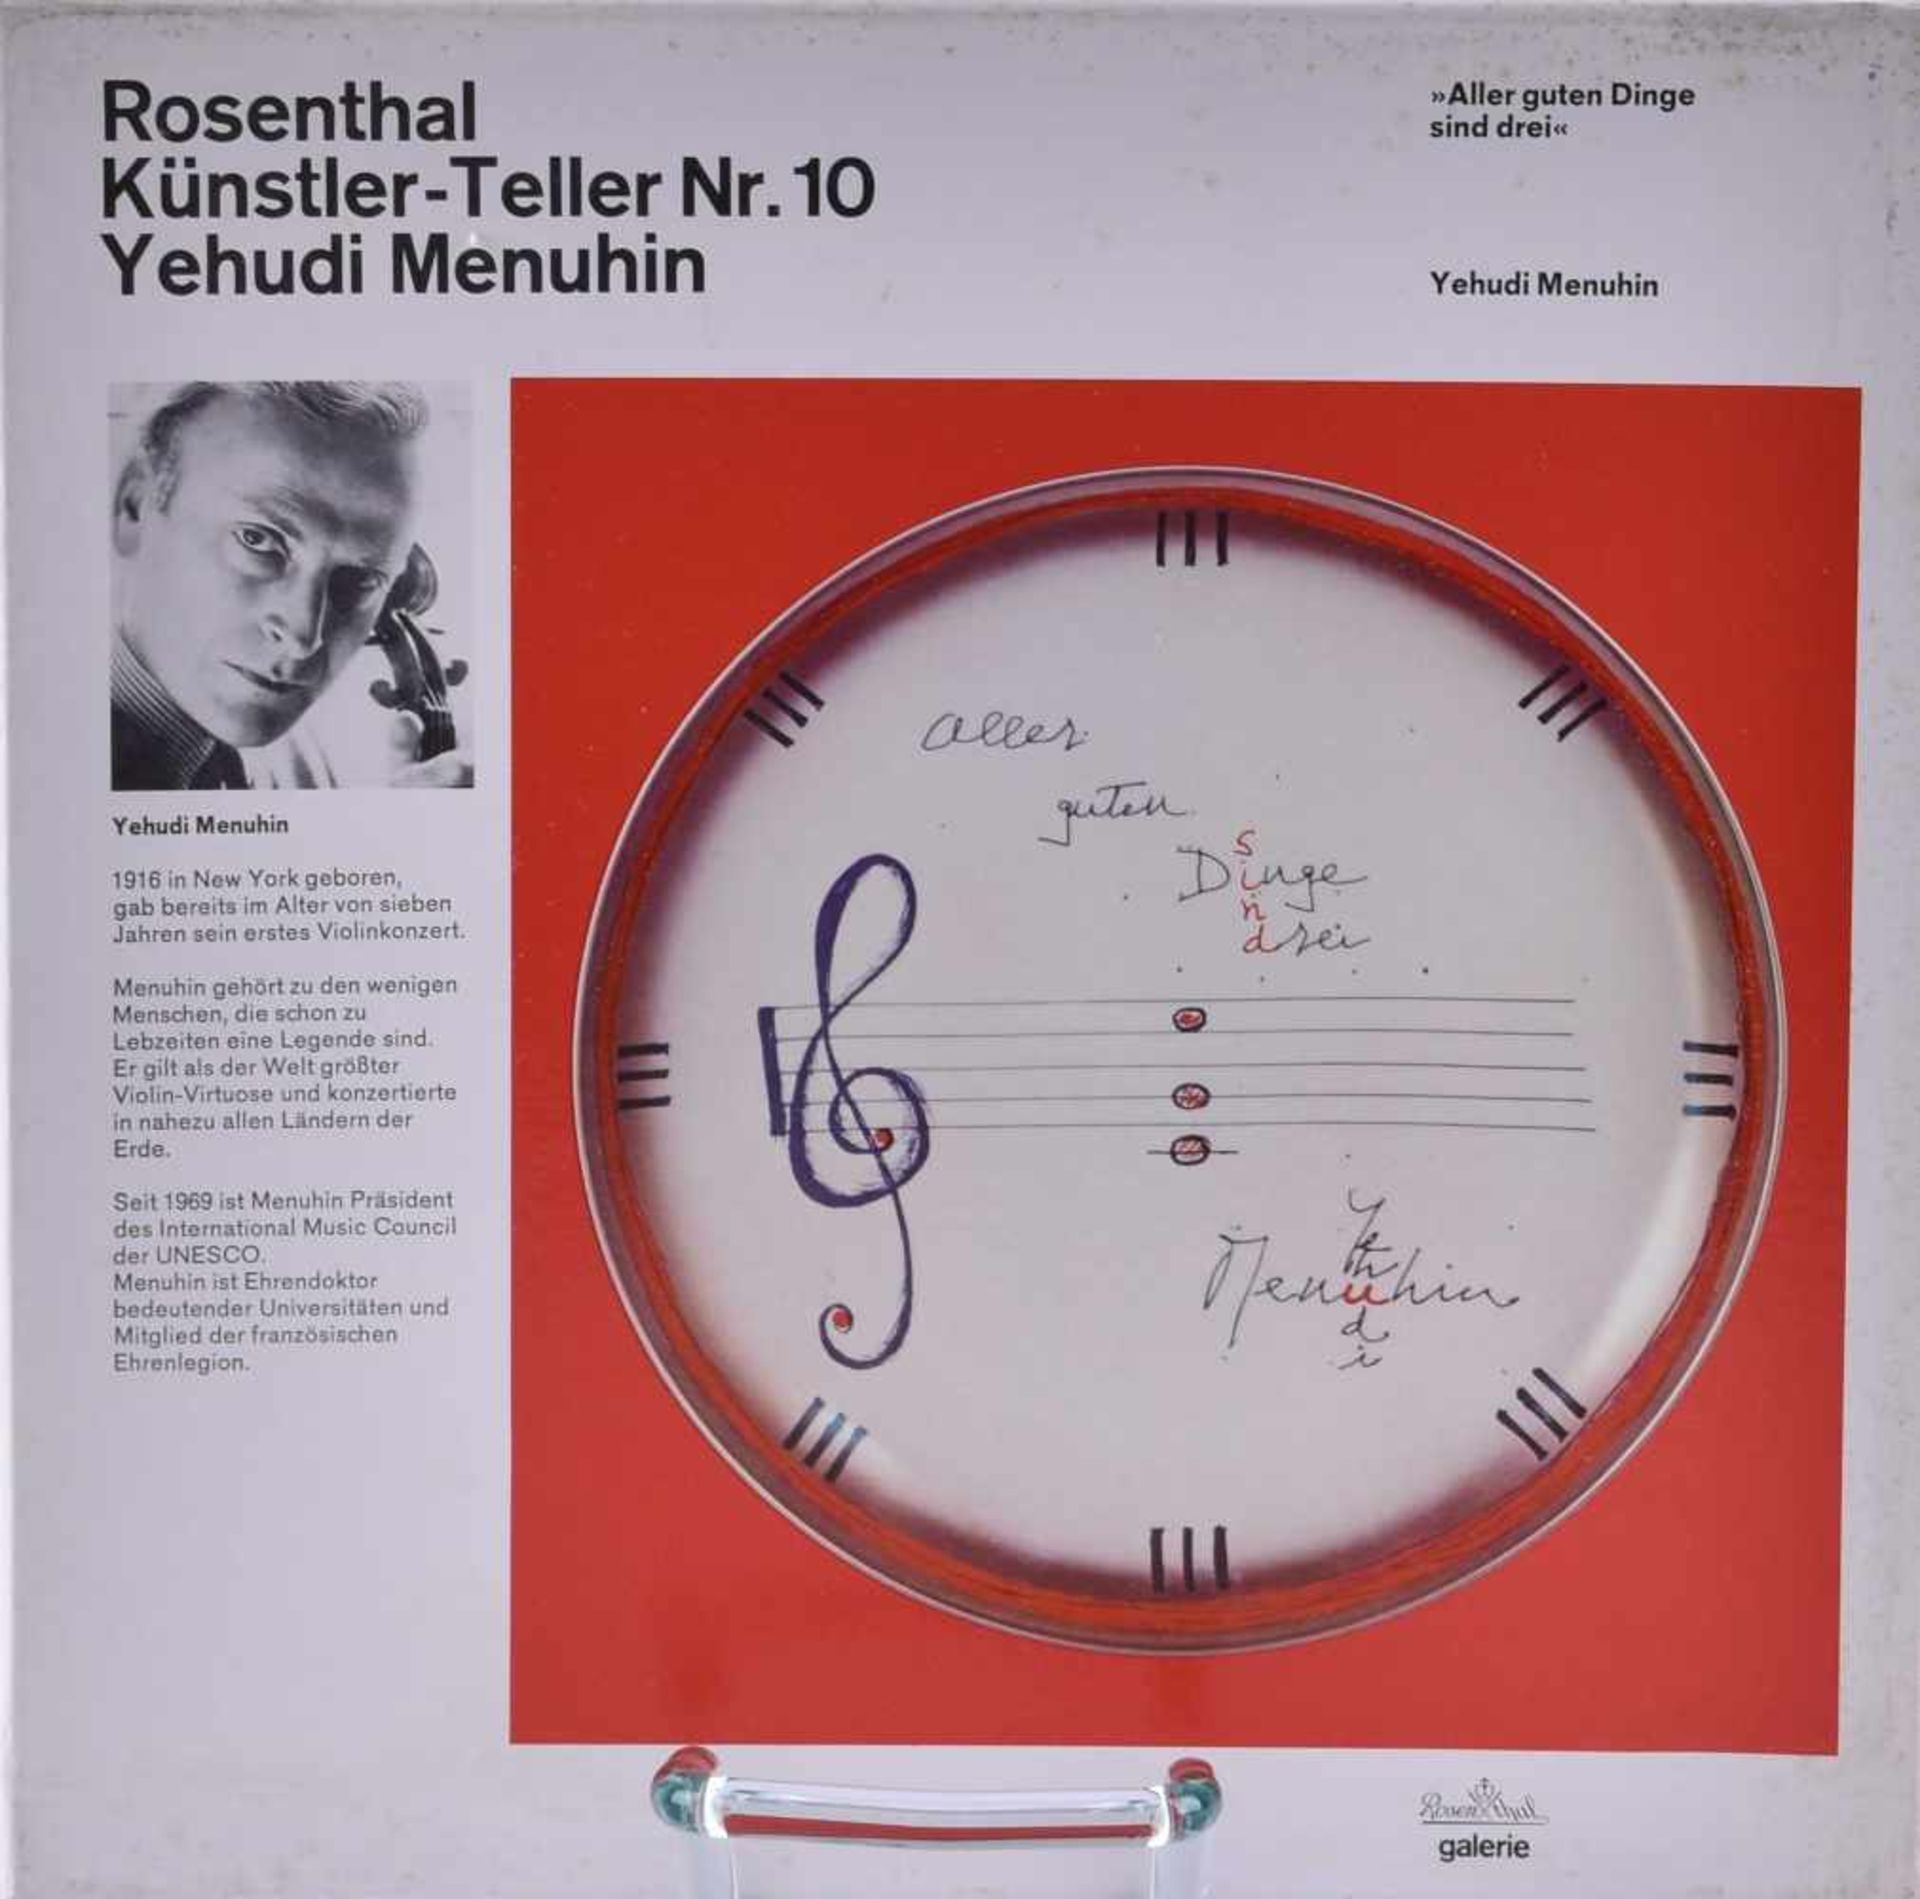 Rosenthal Porzellan Künstler-Teller Nr. 10 Yehudi MenuhinAus der Serie Rosenthal Studioline mit - Image 2 of 3